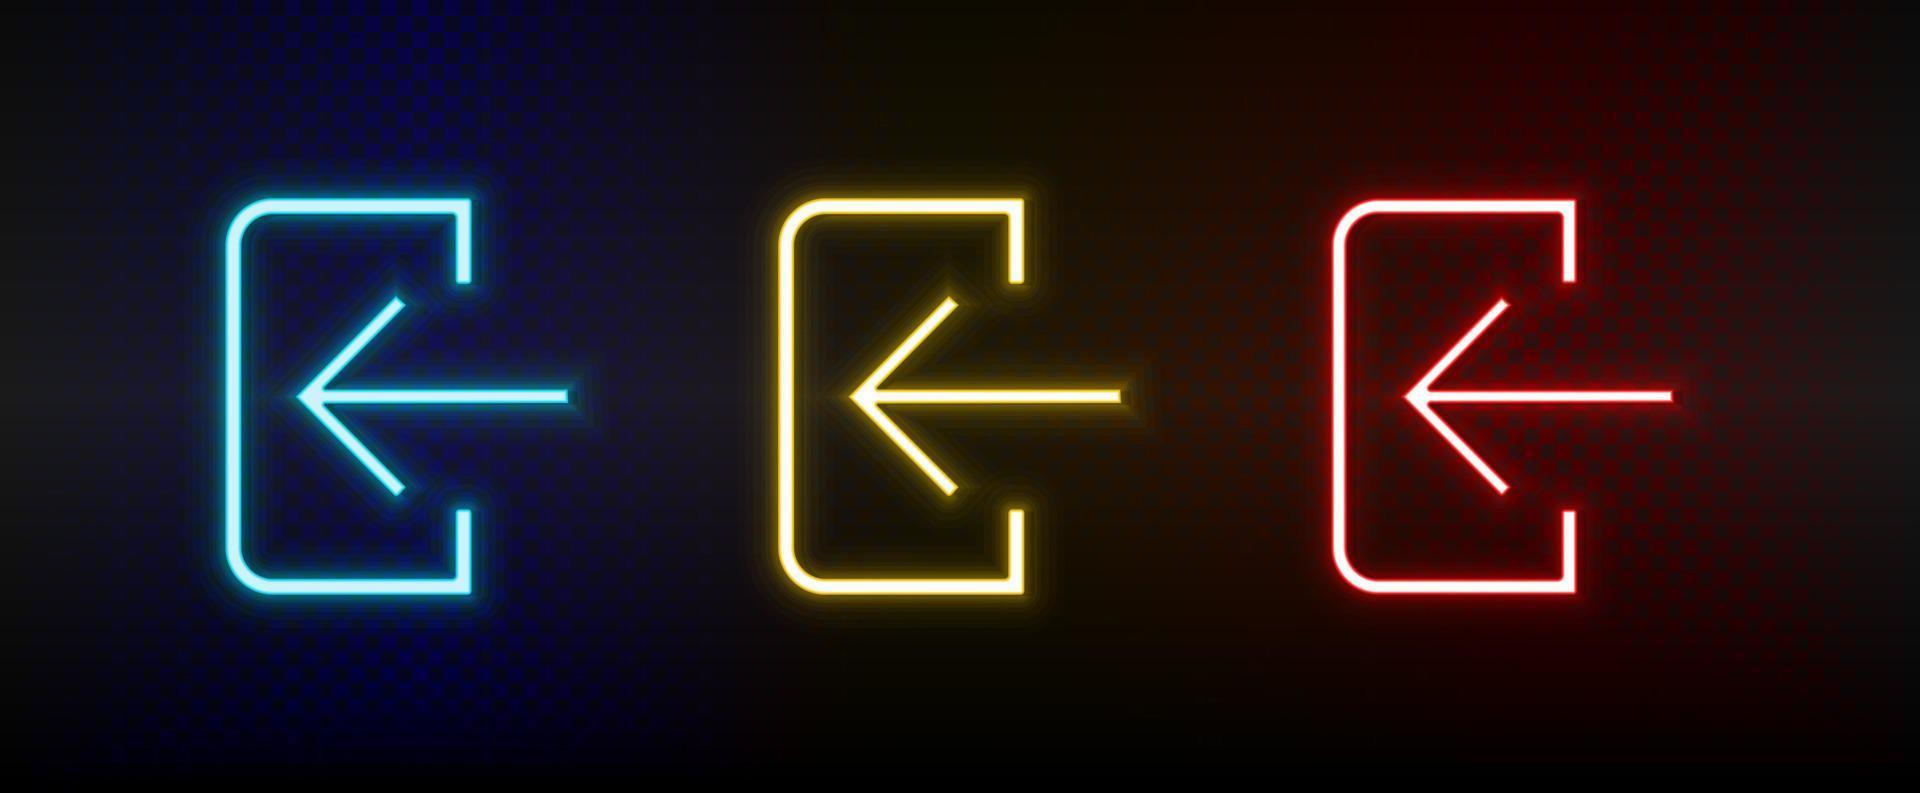 Neon icons. Ui arrow. Set of red, blue, yellow neon vector icon on darken background